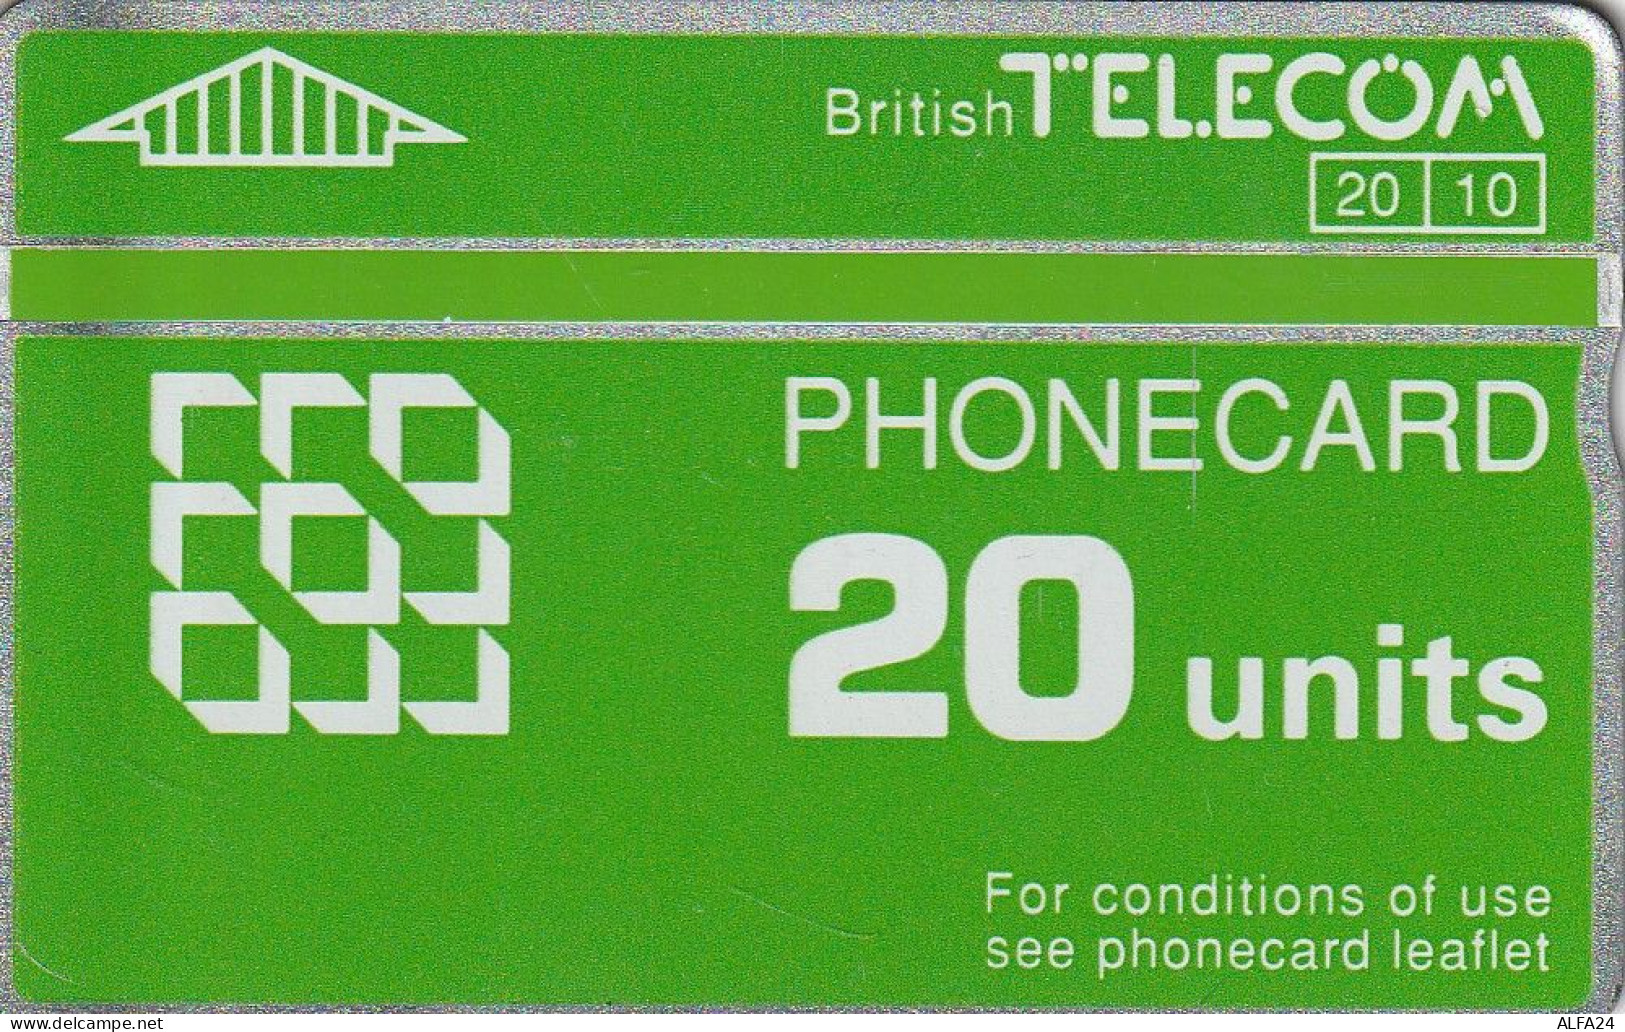 PHONE CARD UK LG (CZ1715 - BT General Issues